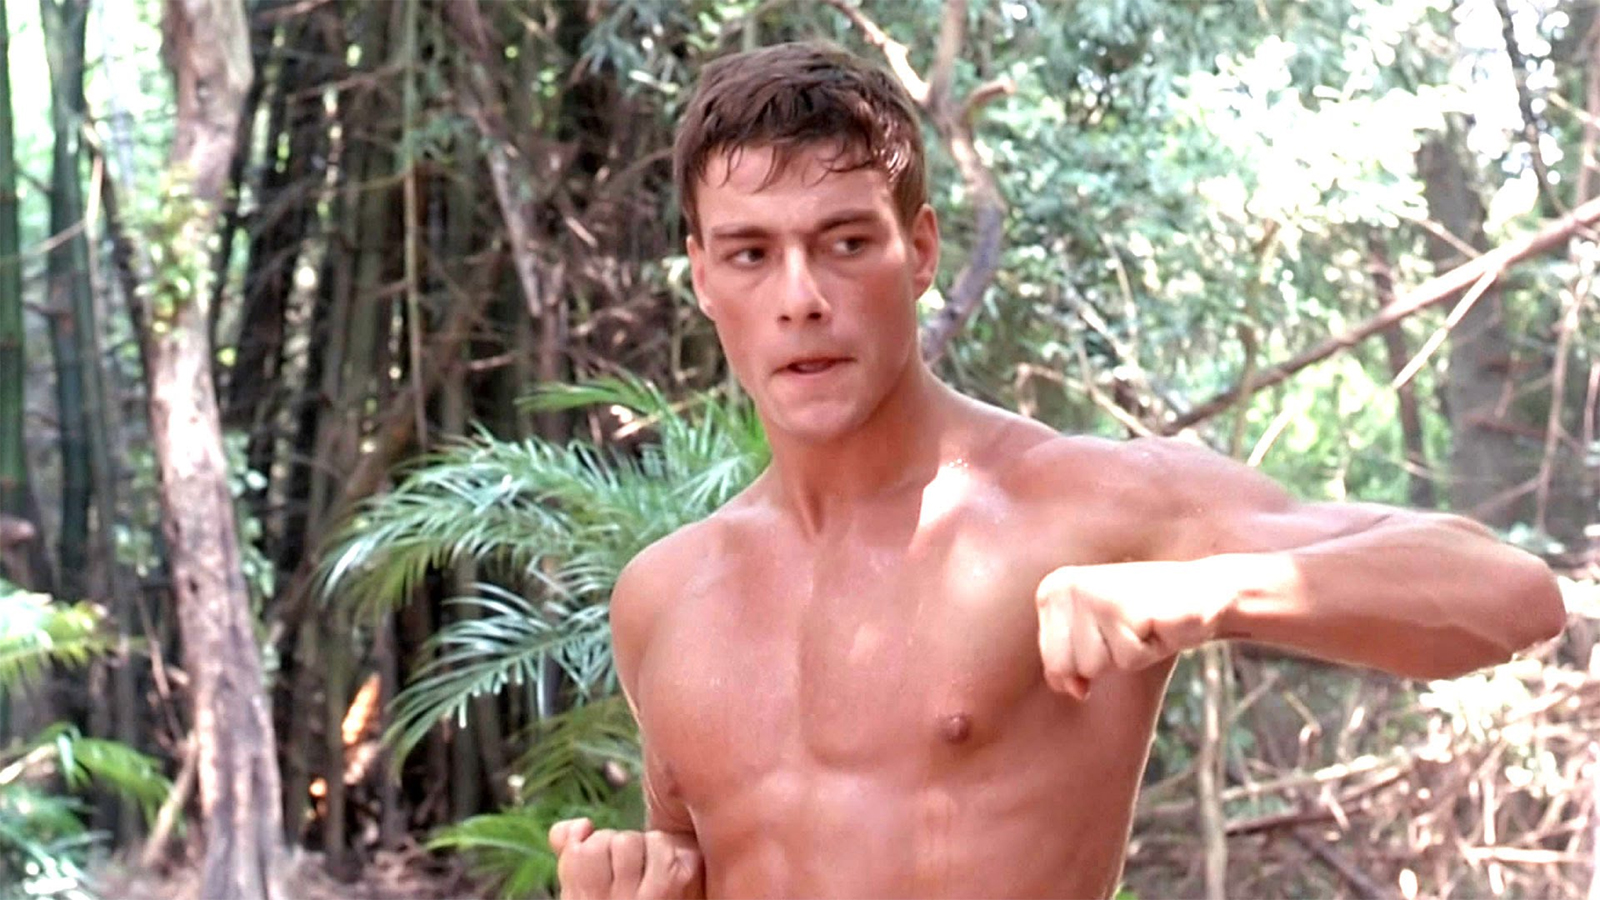 Personagem inspirado em Van Damme está em Mortal Kombat? Veja